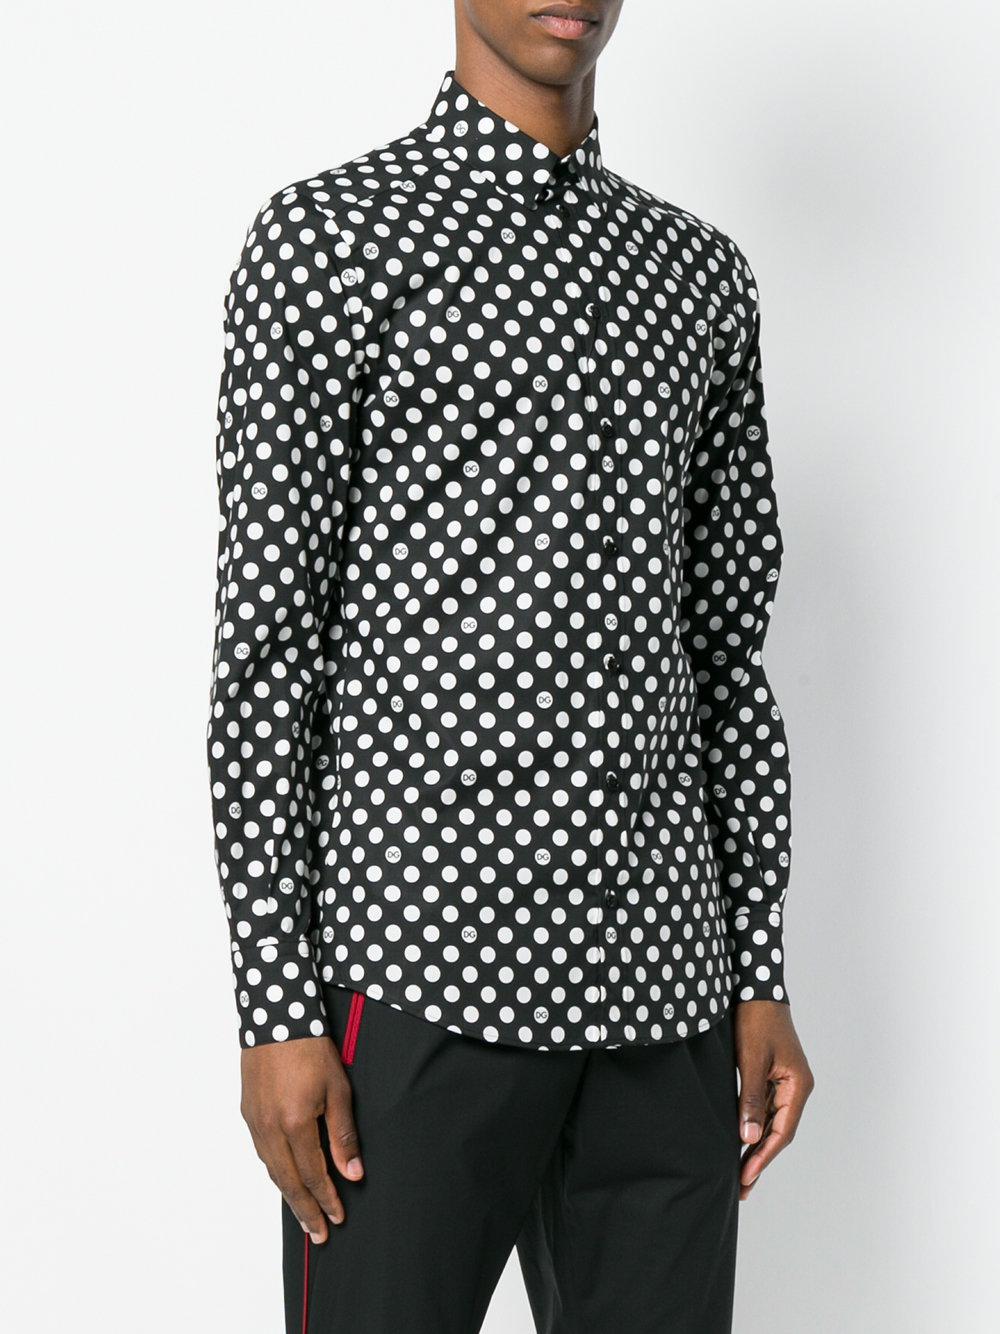 Dolce & Gabbana Cotton Polka Dot Shirt in Black for Men - Lyst